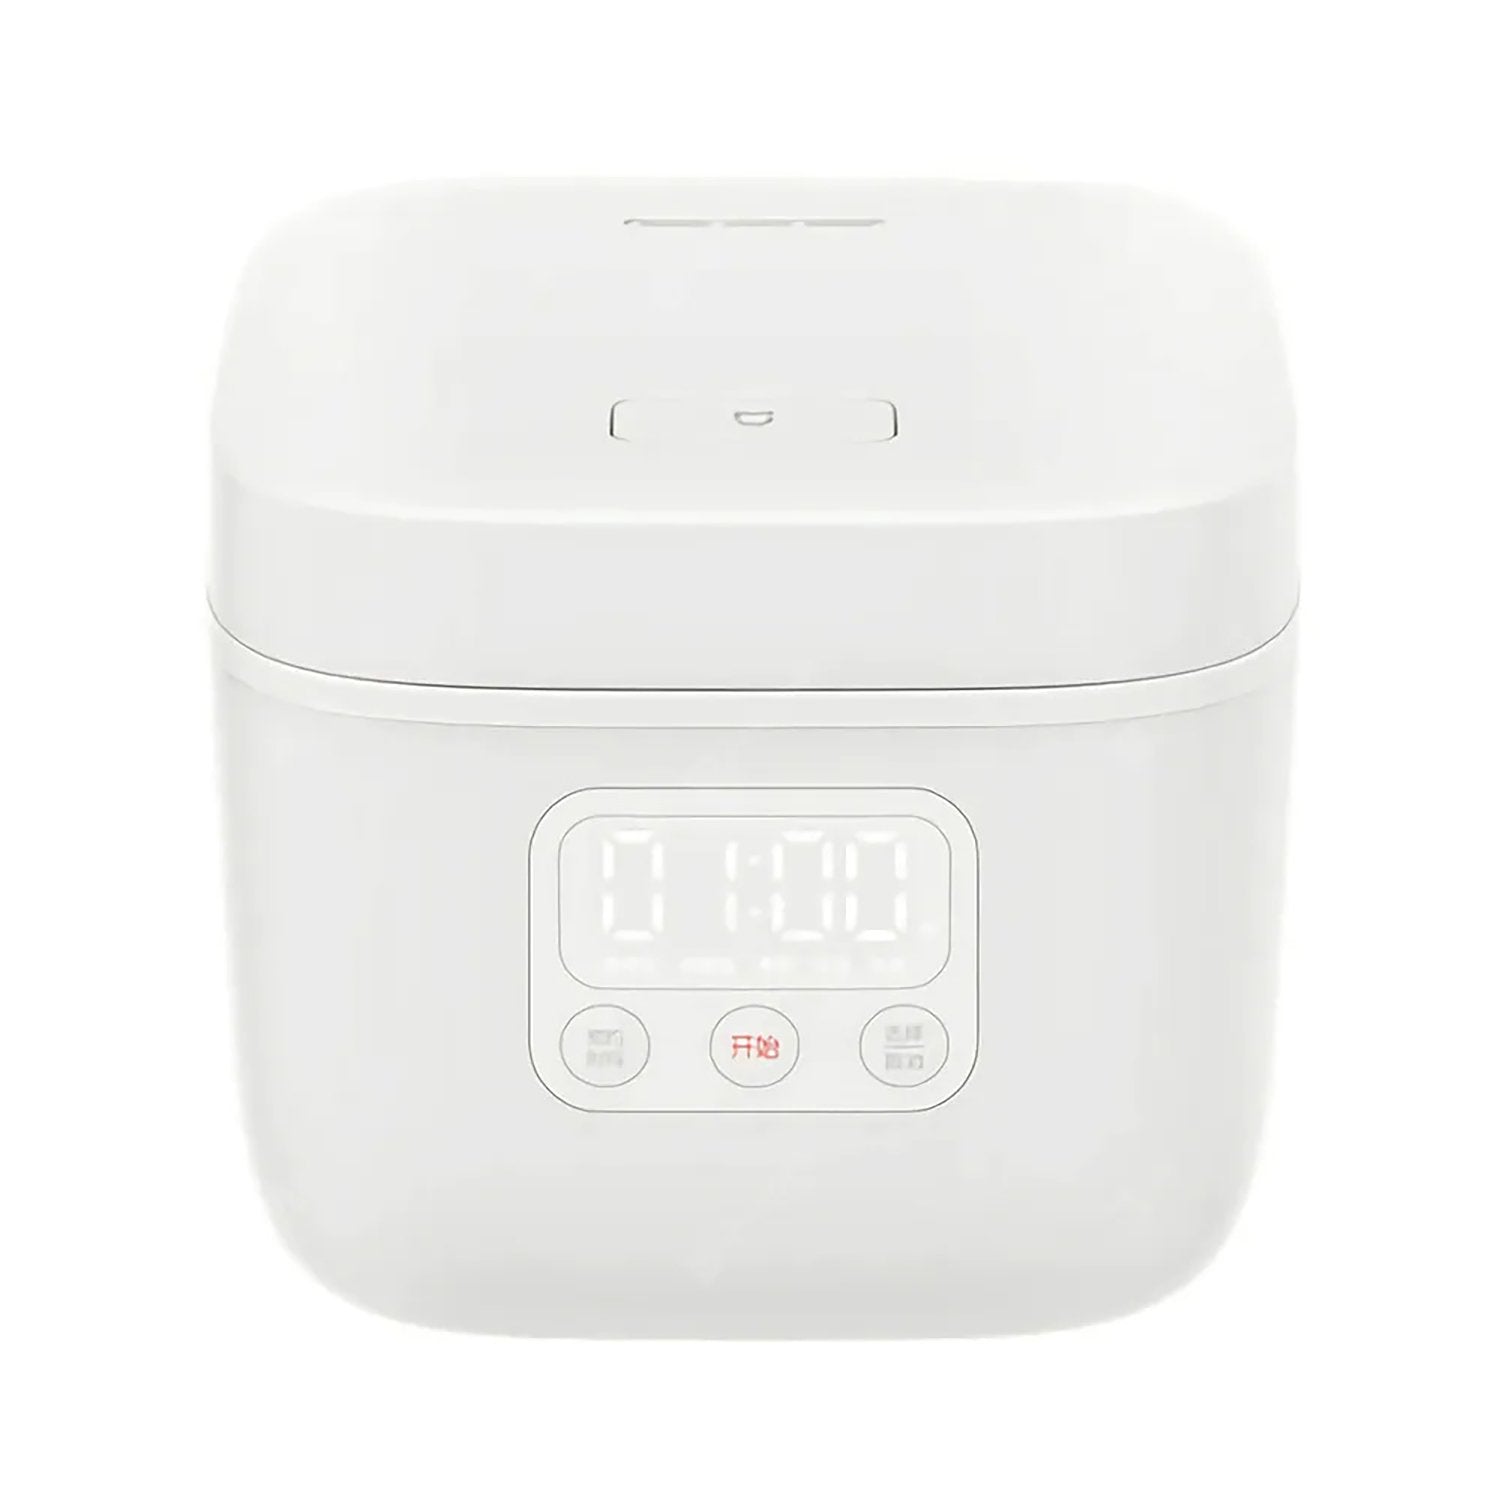 XIAOMI Mijia Mini Electric Rice Cooker Machine 1.6L with APP Control, White Default Xiaomi Default 